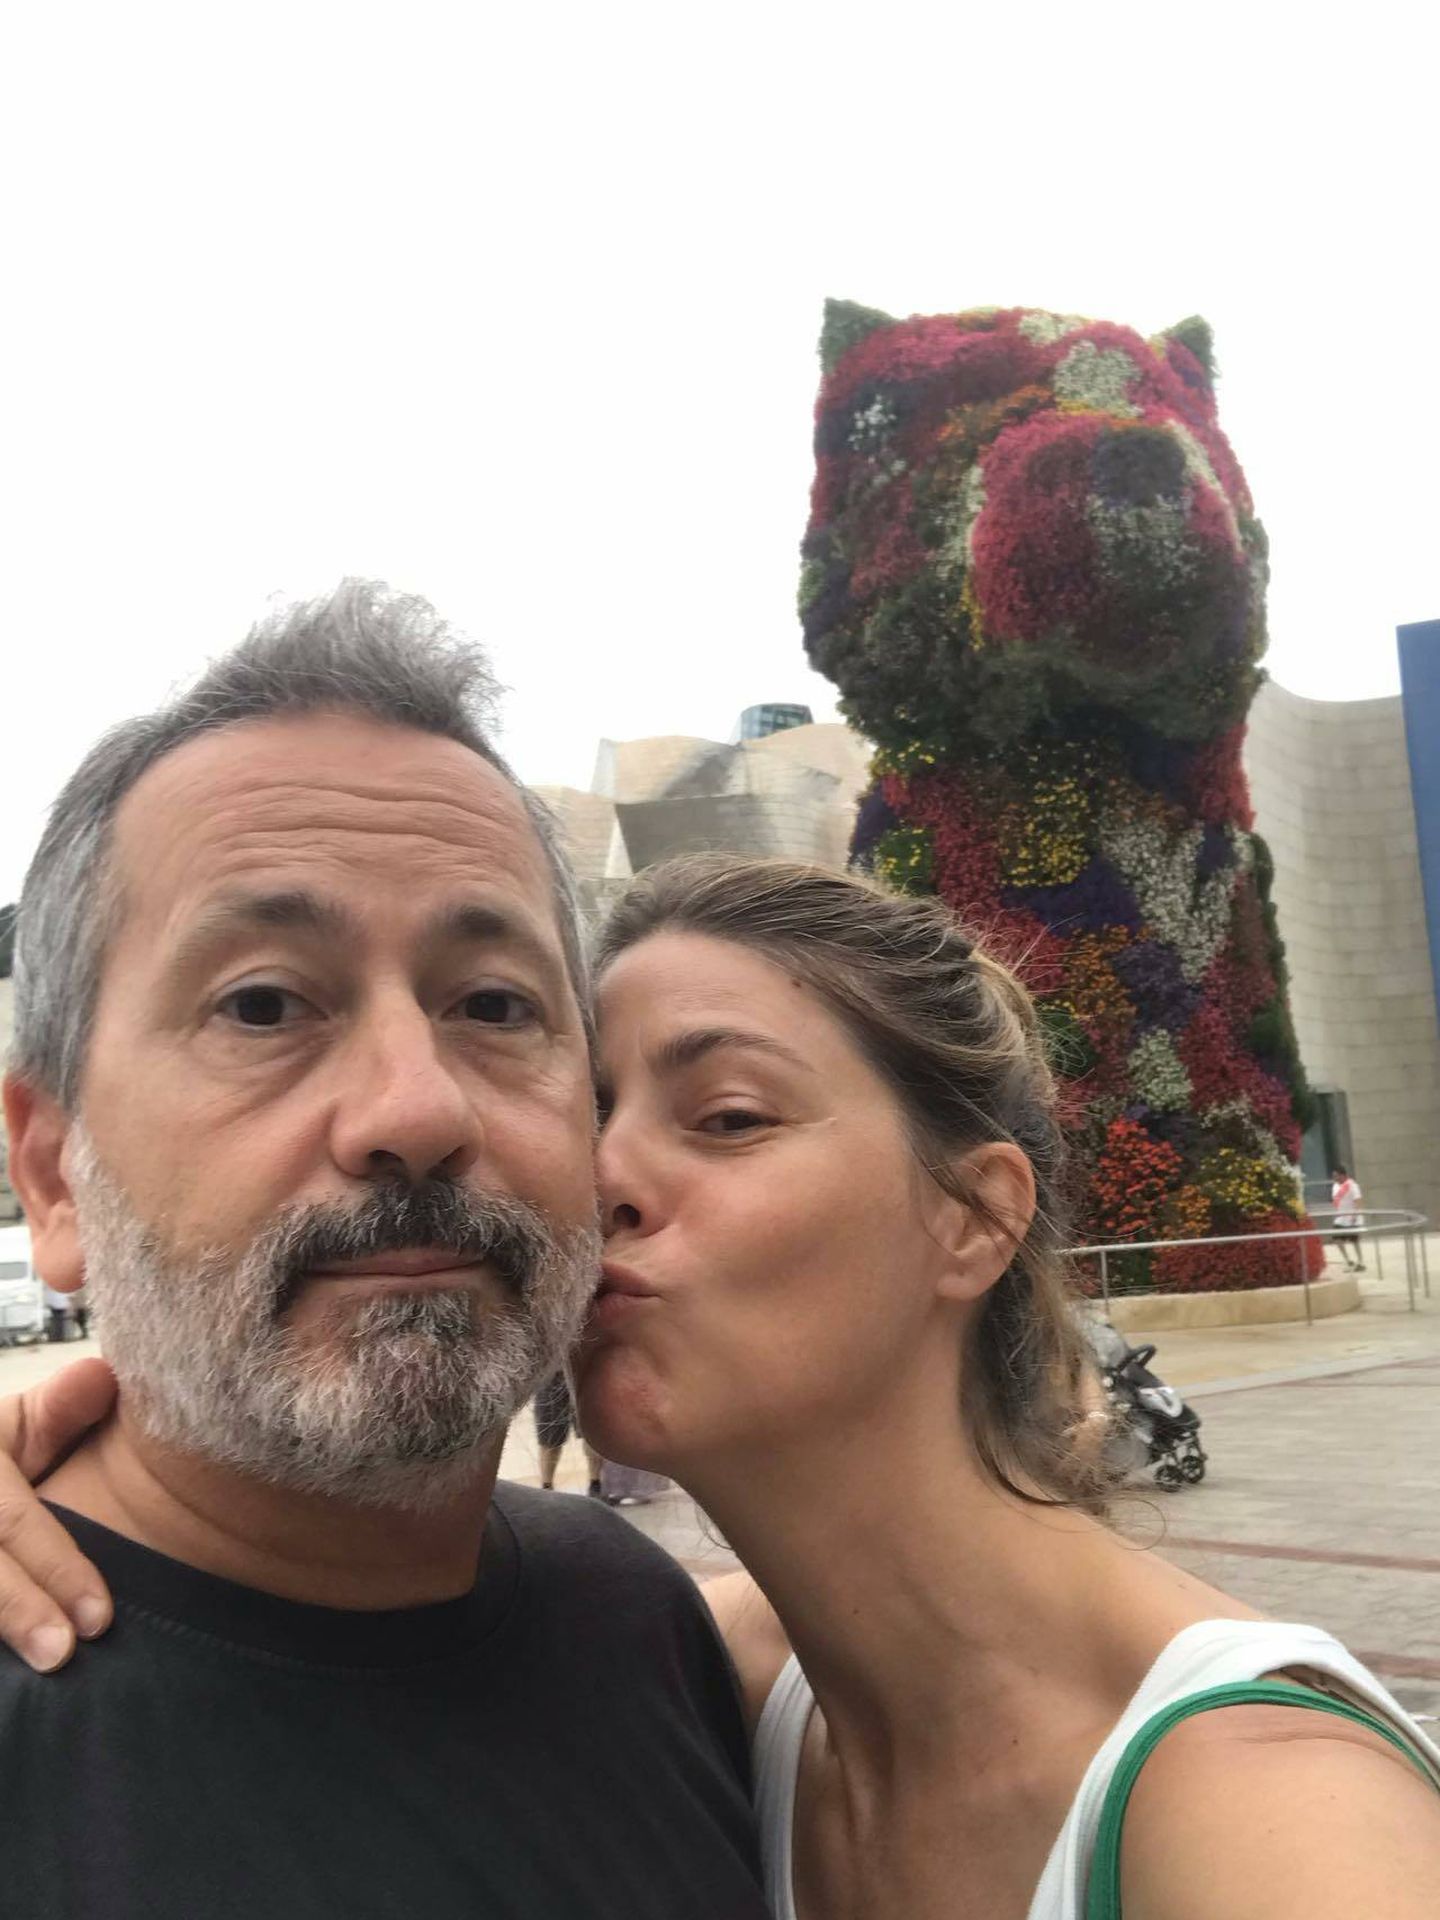 Manuela Velasco, posando con su pareja, Rafa Castejón. (Instagram/@manuelavelascooficial)